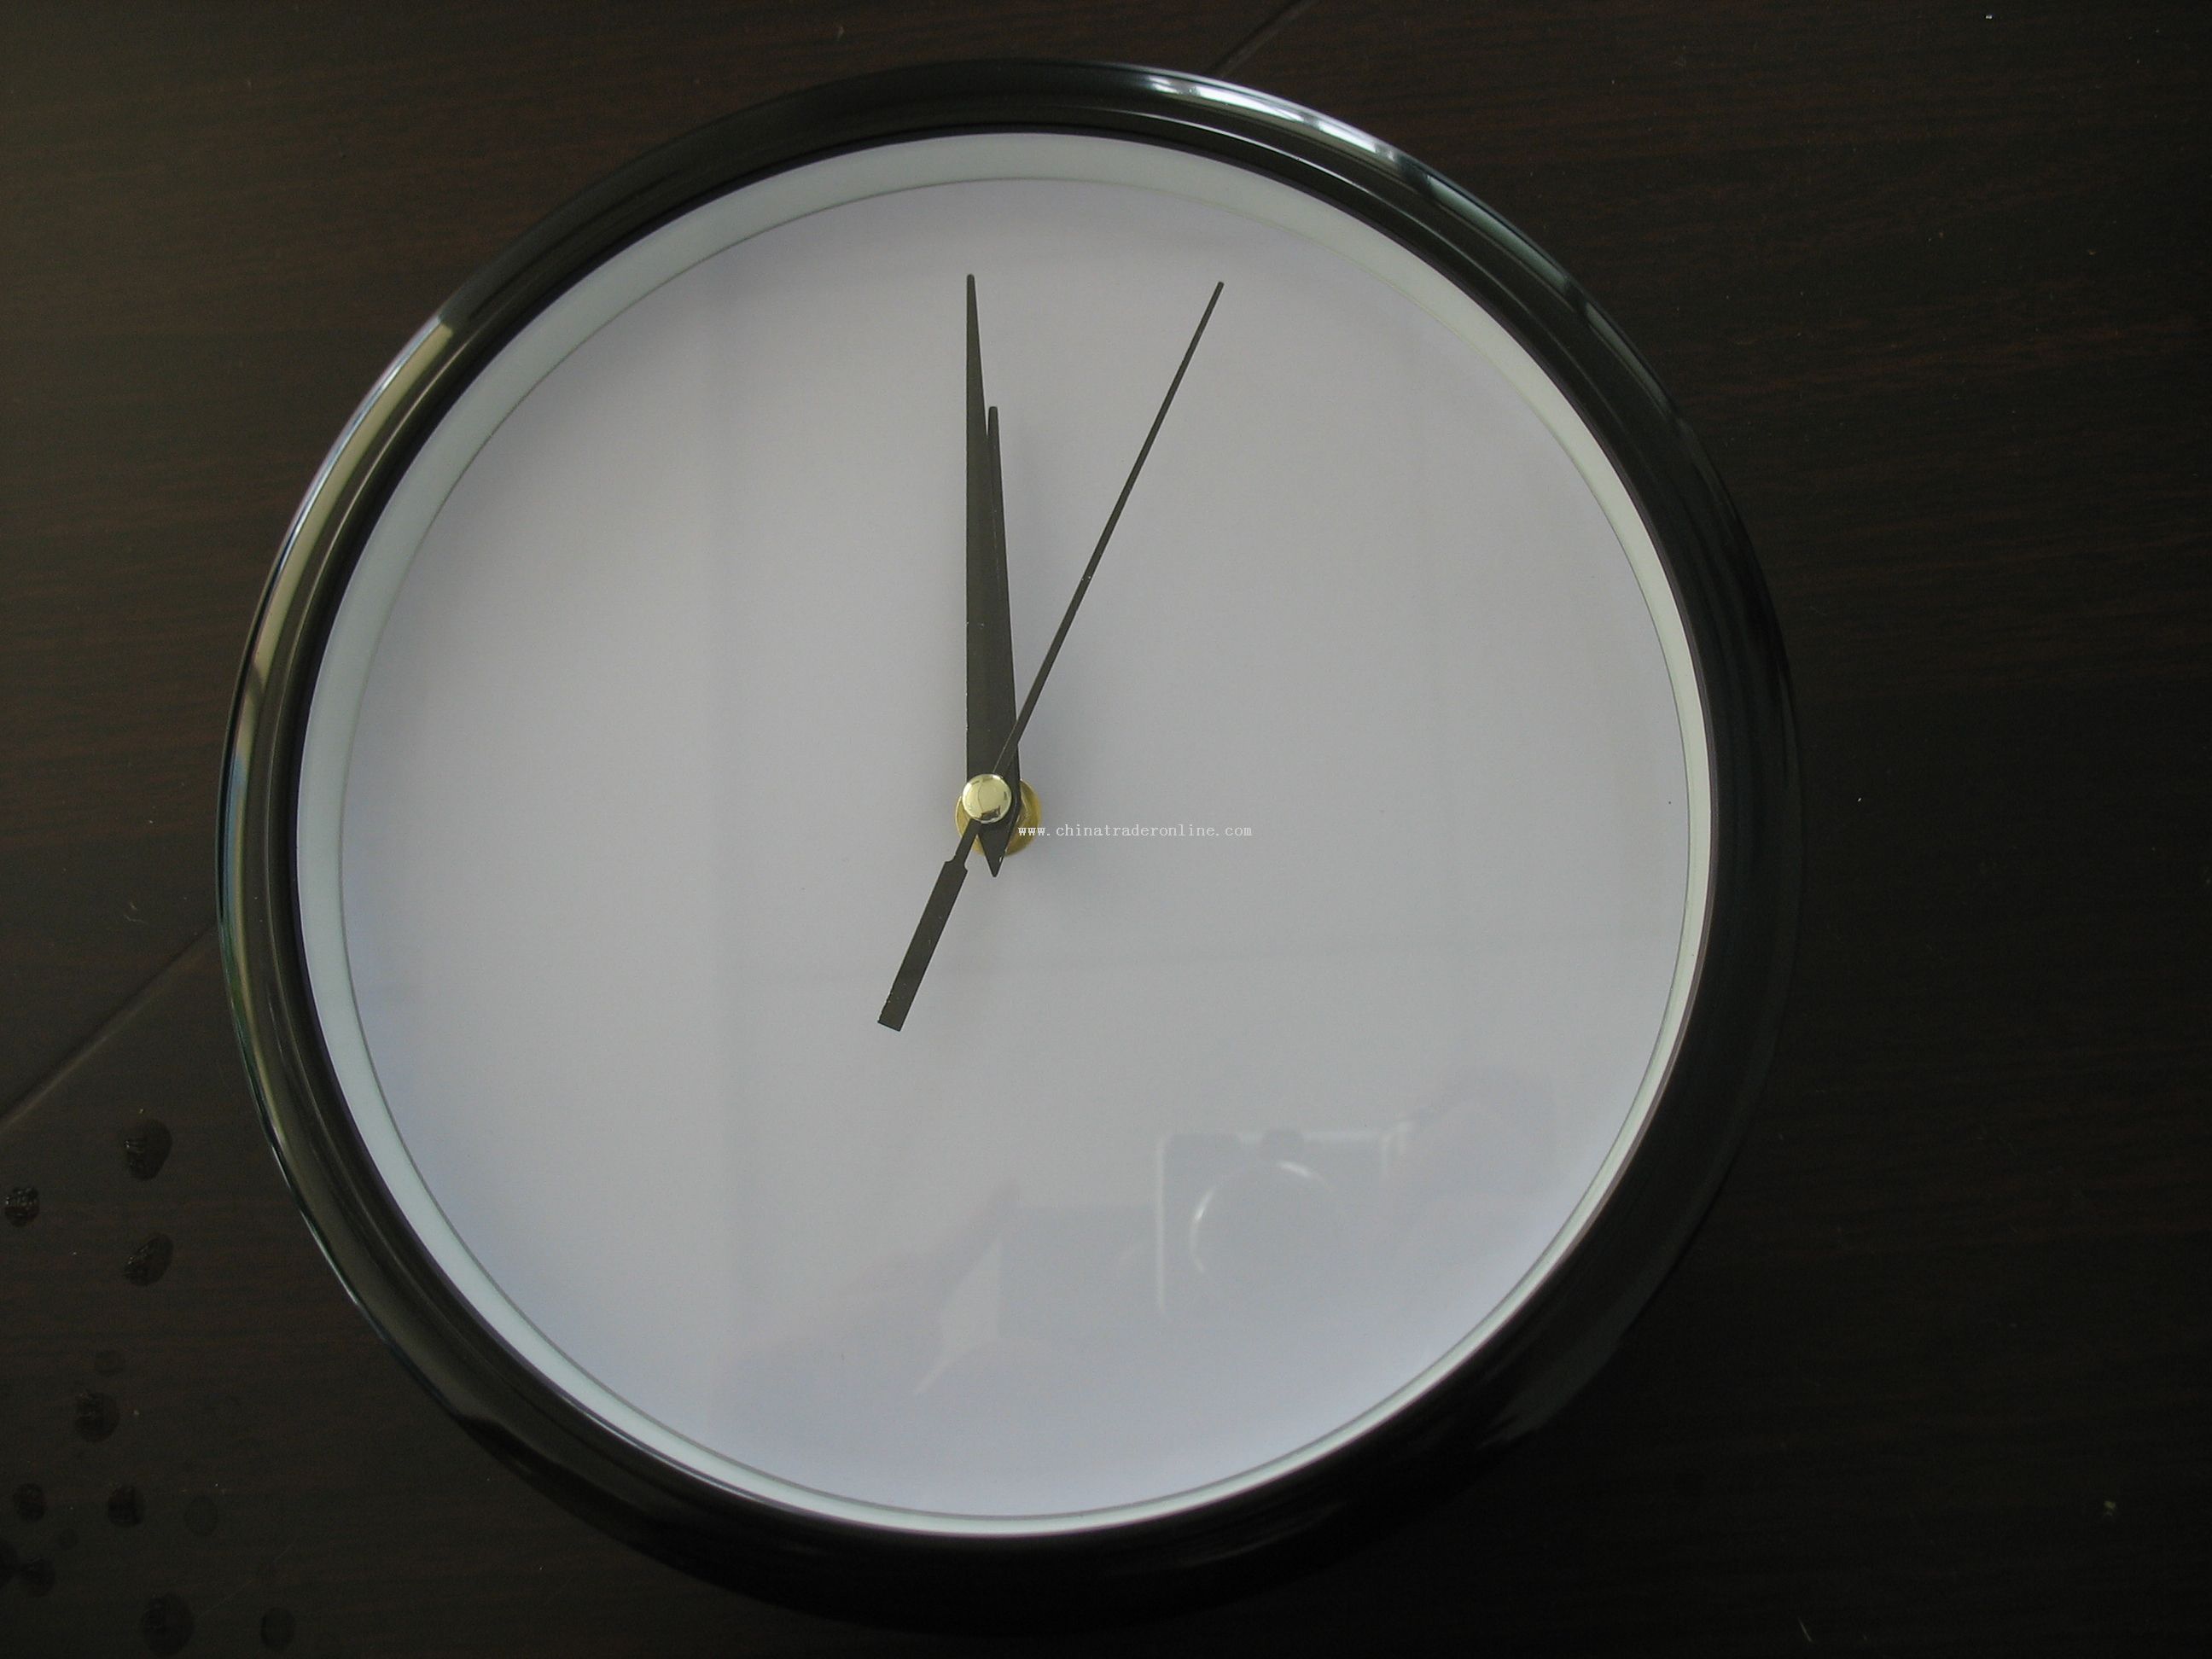 The cheapest Plastic Clock